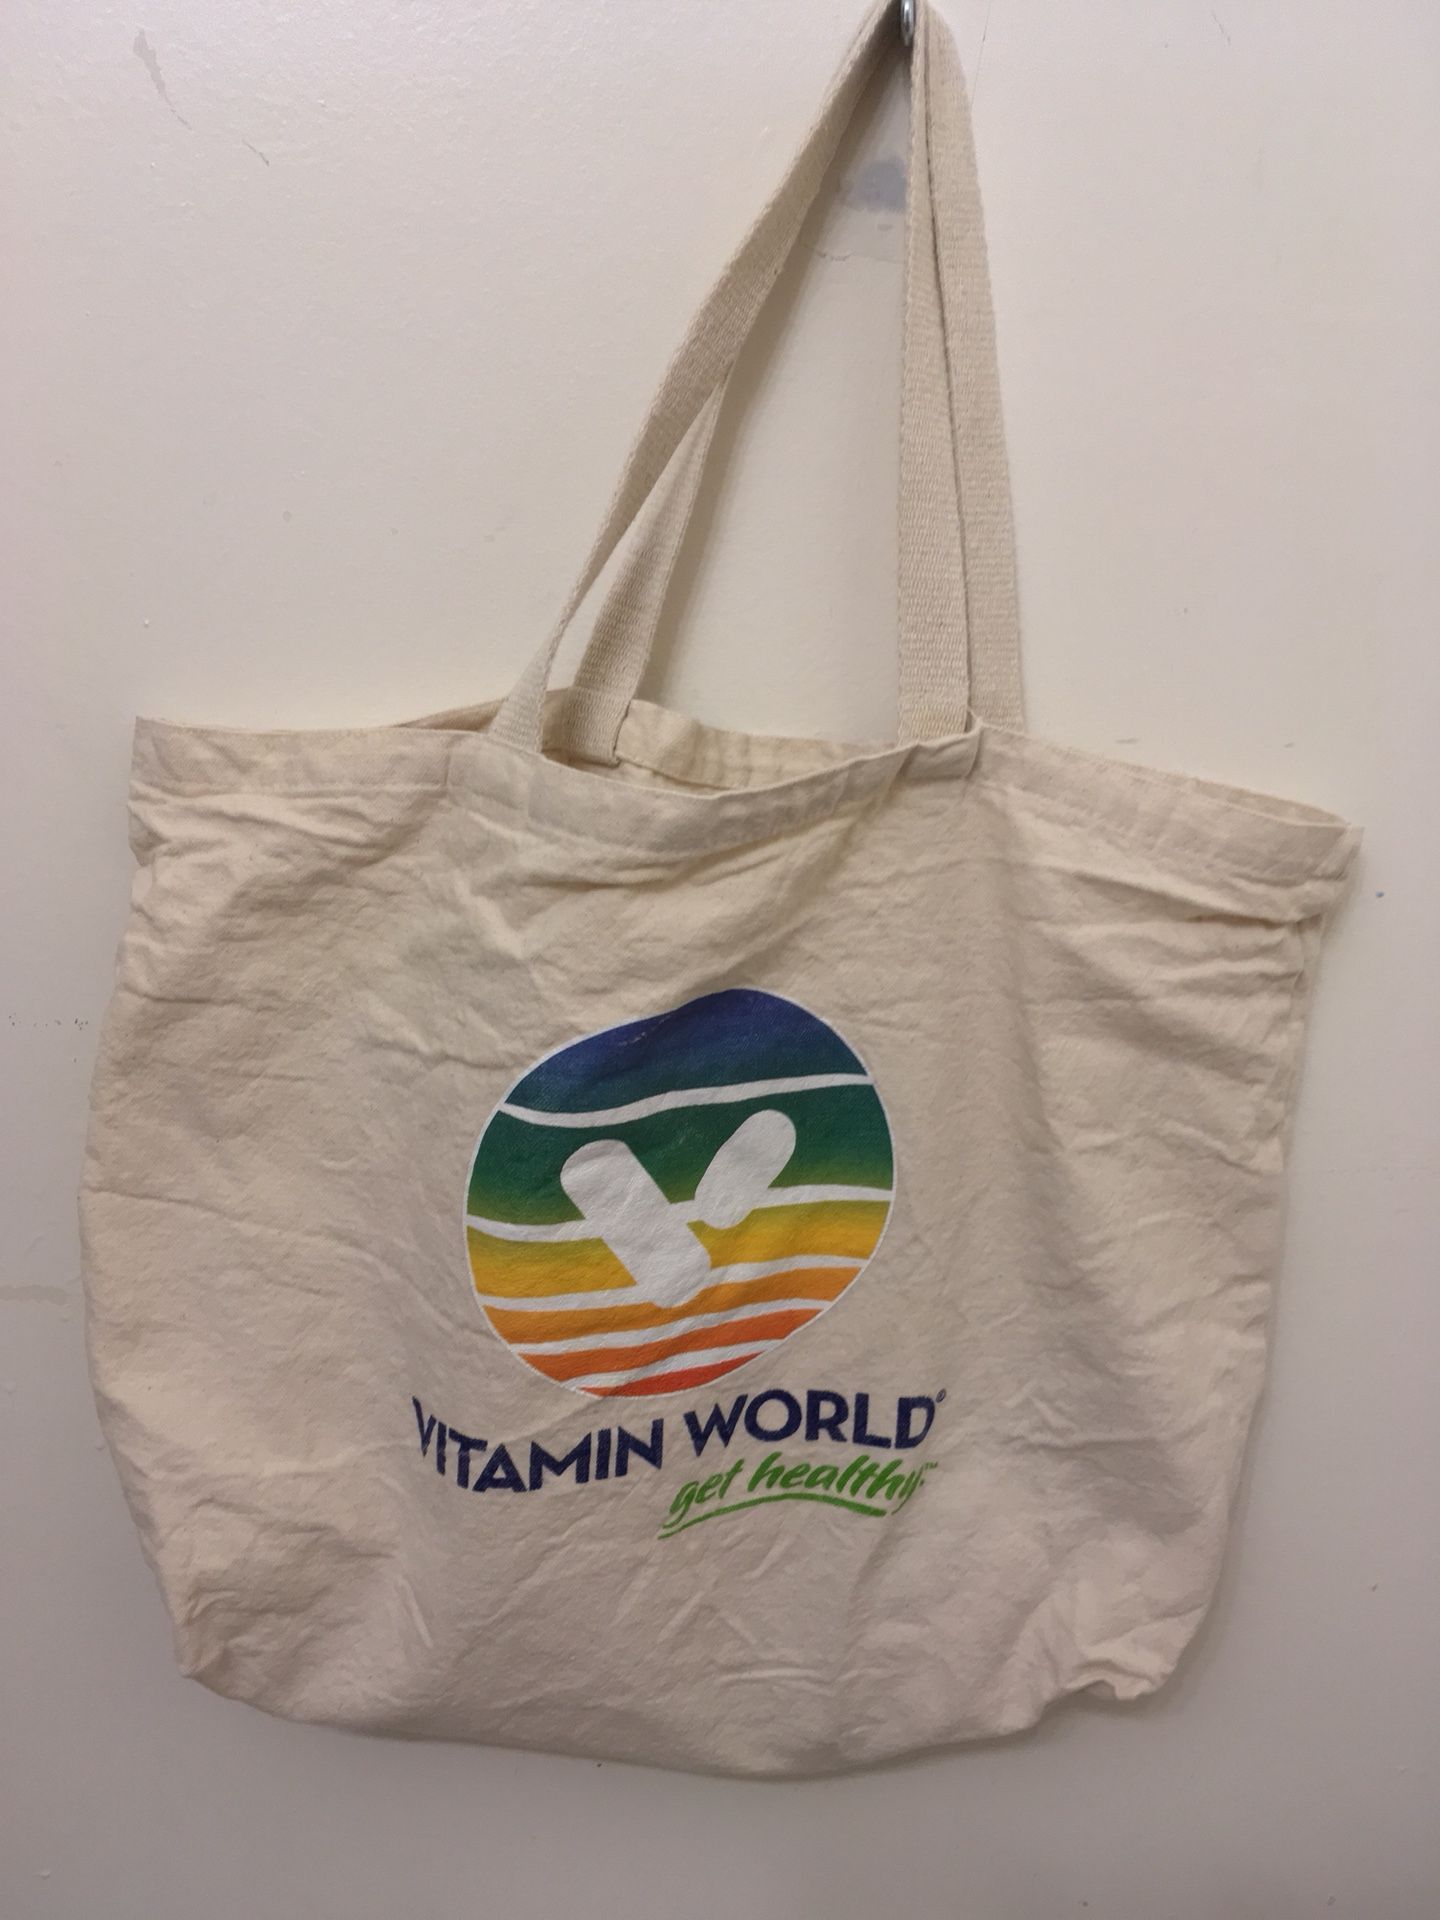 Vitamin World Carry Bag $5